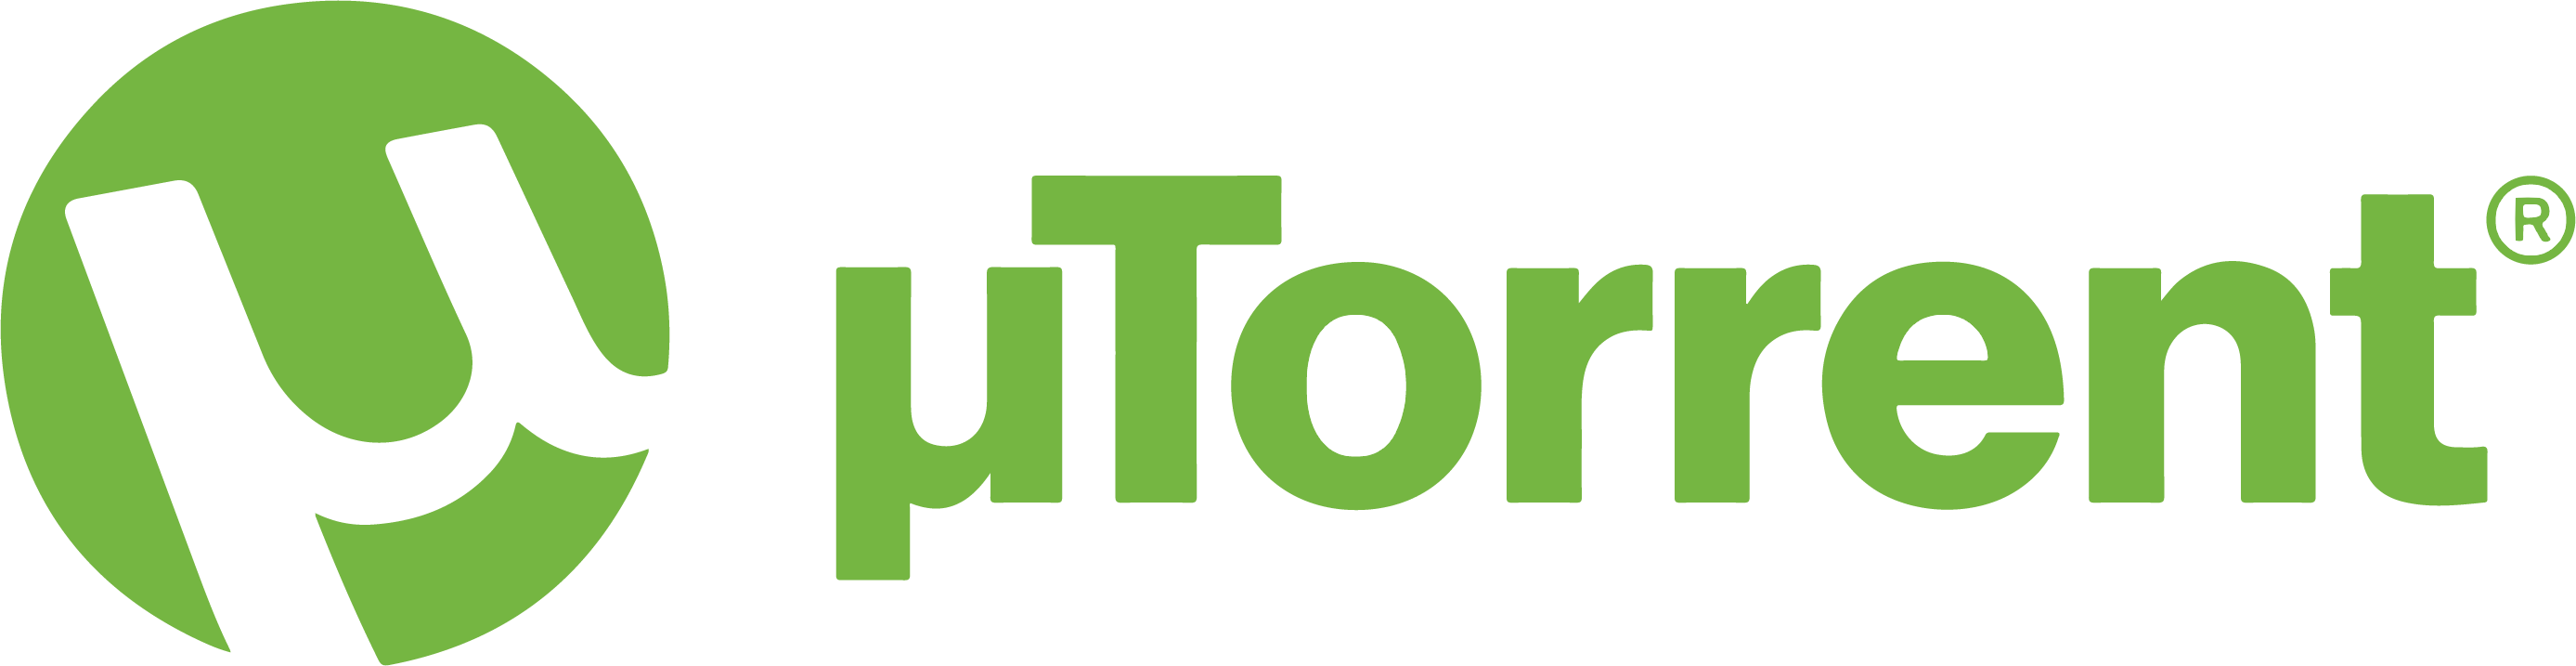 uTorrent Logo png